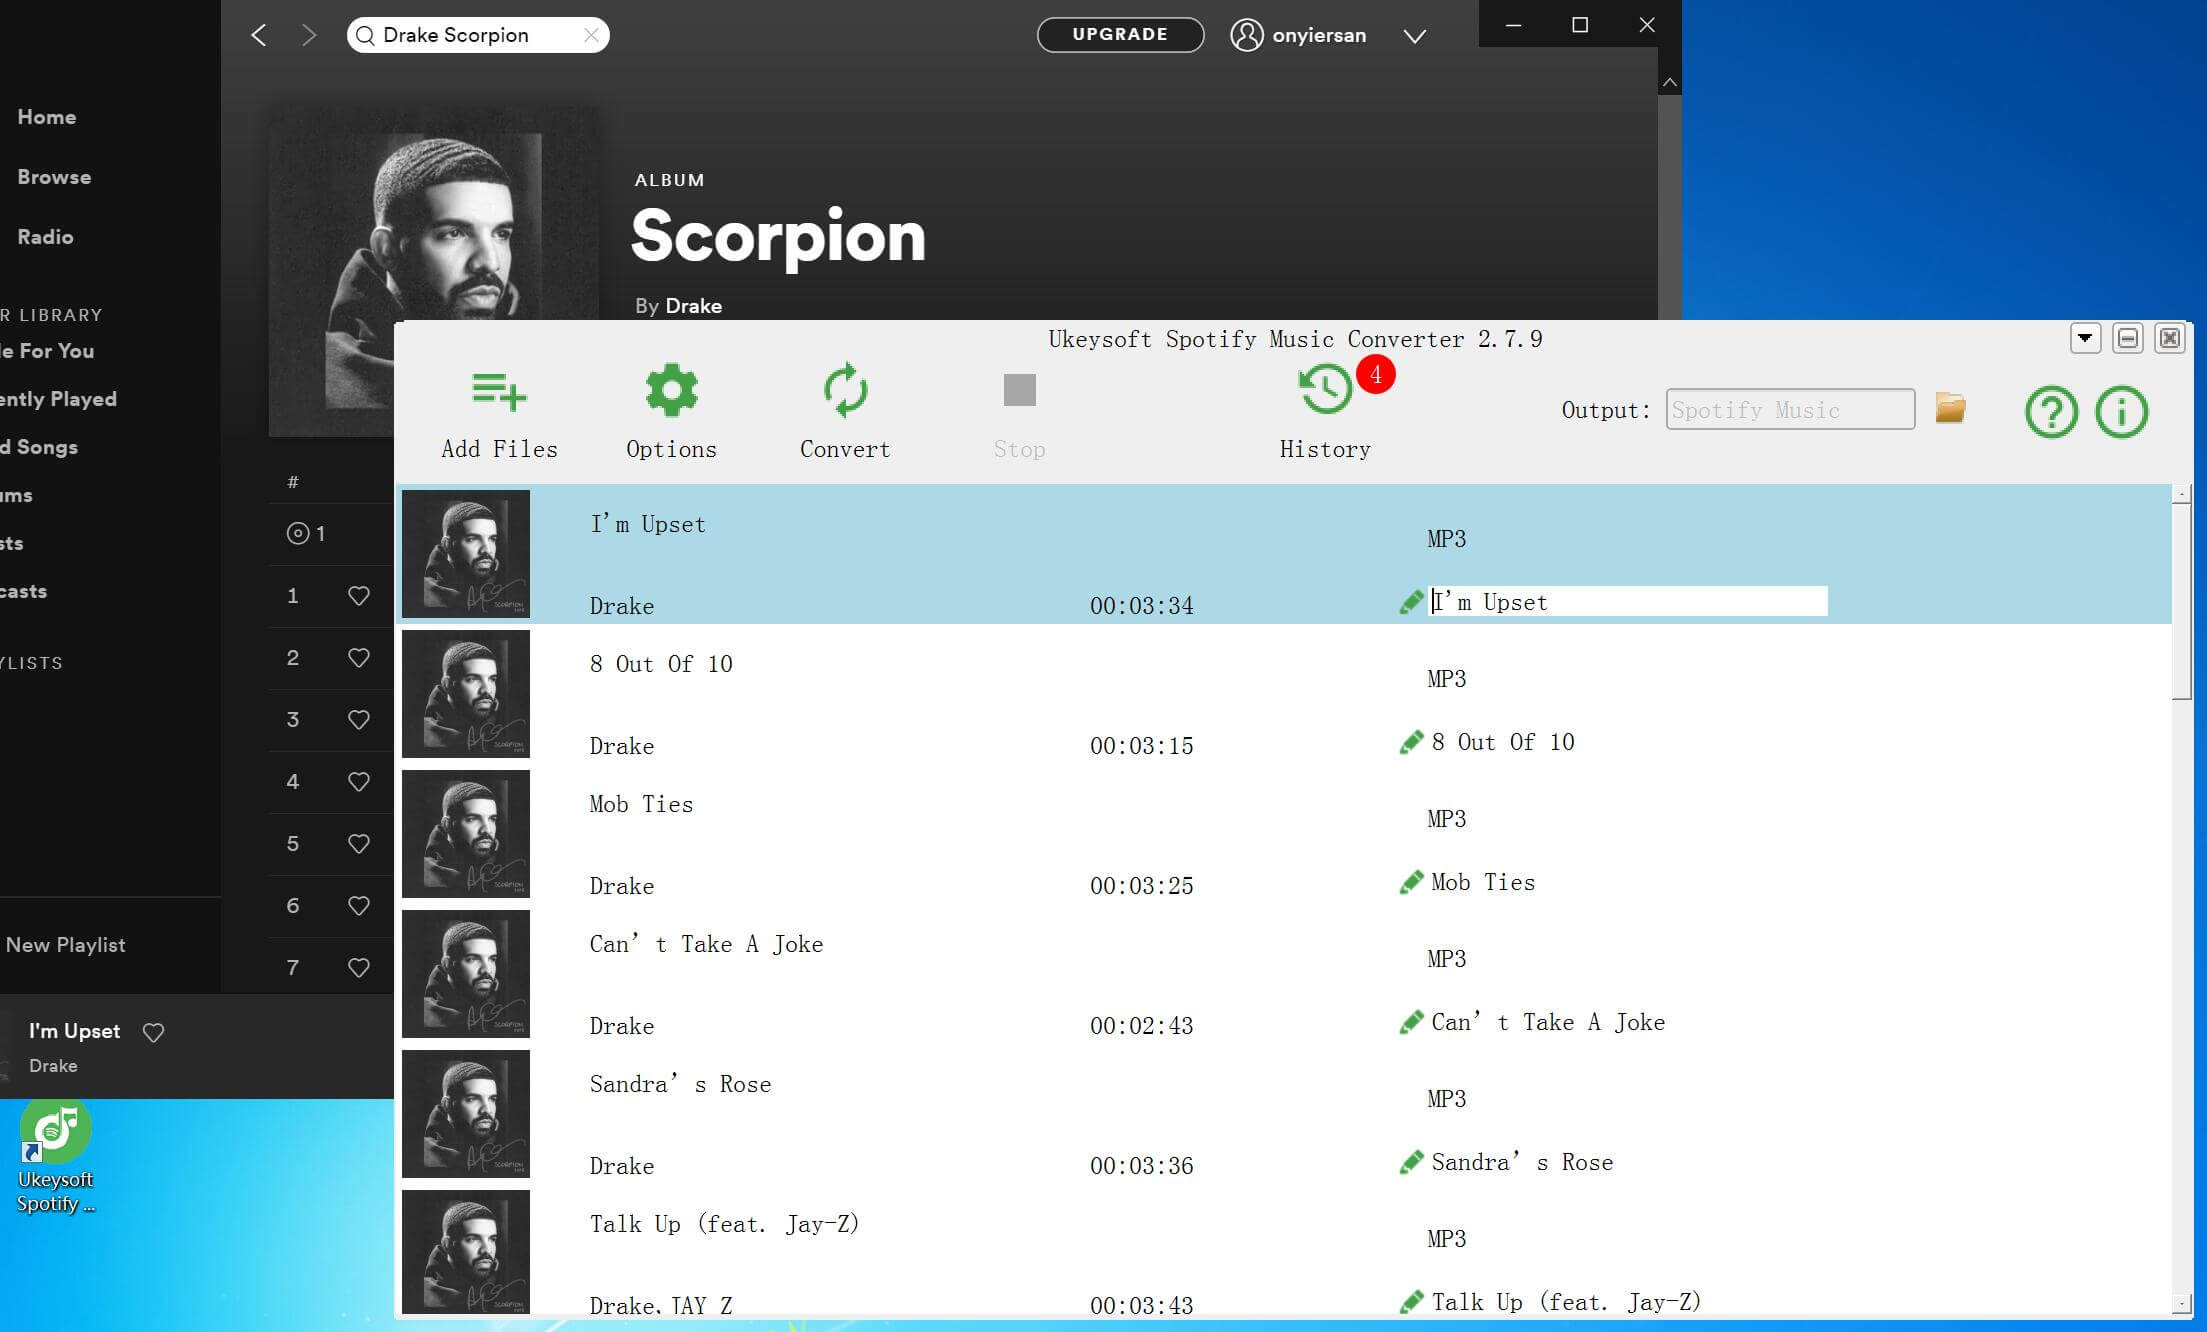 free download Drake’s Scorpion Album from Spotify